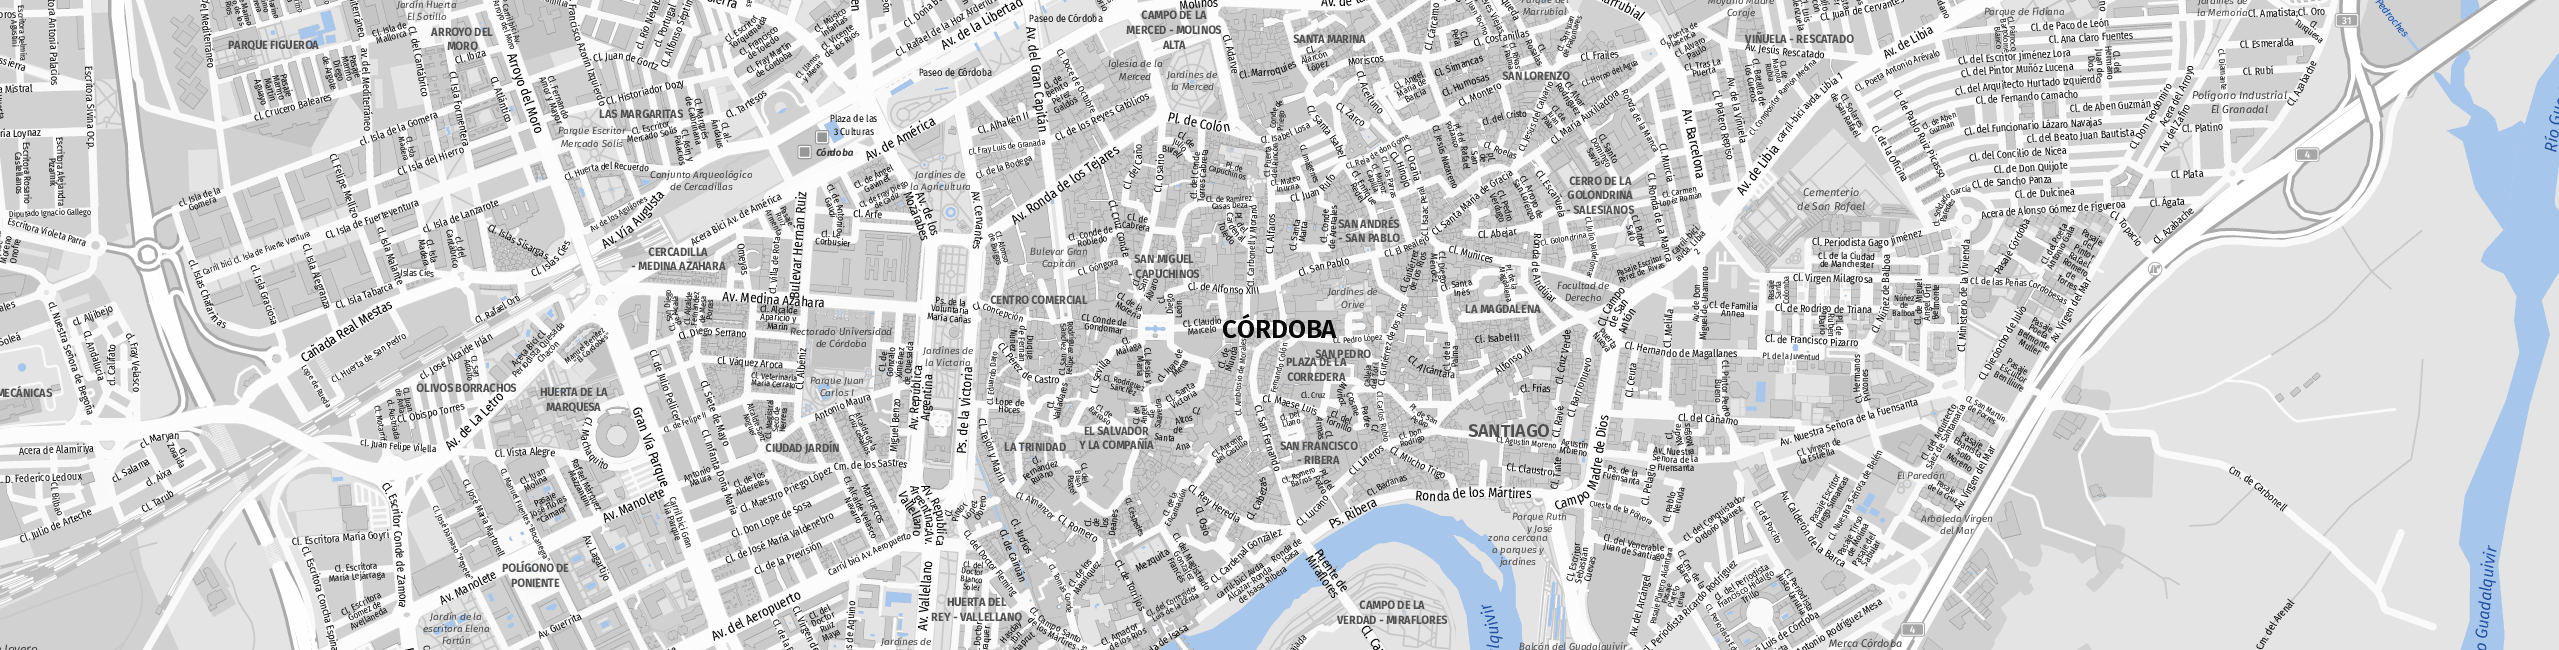 Stadtplan Córdoba zum Downloaden.